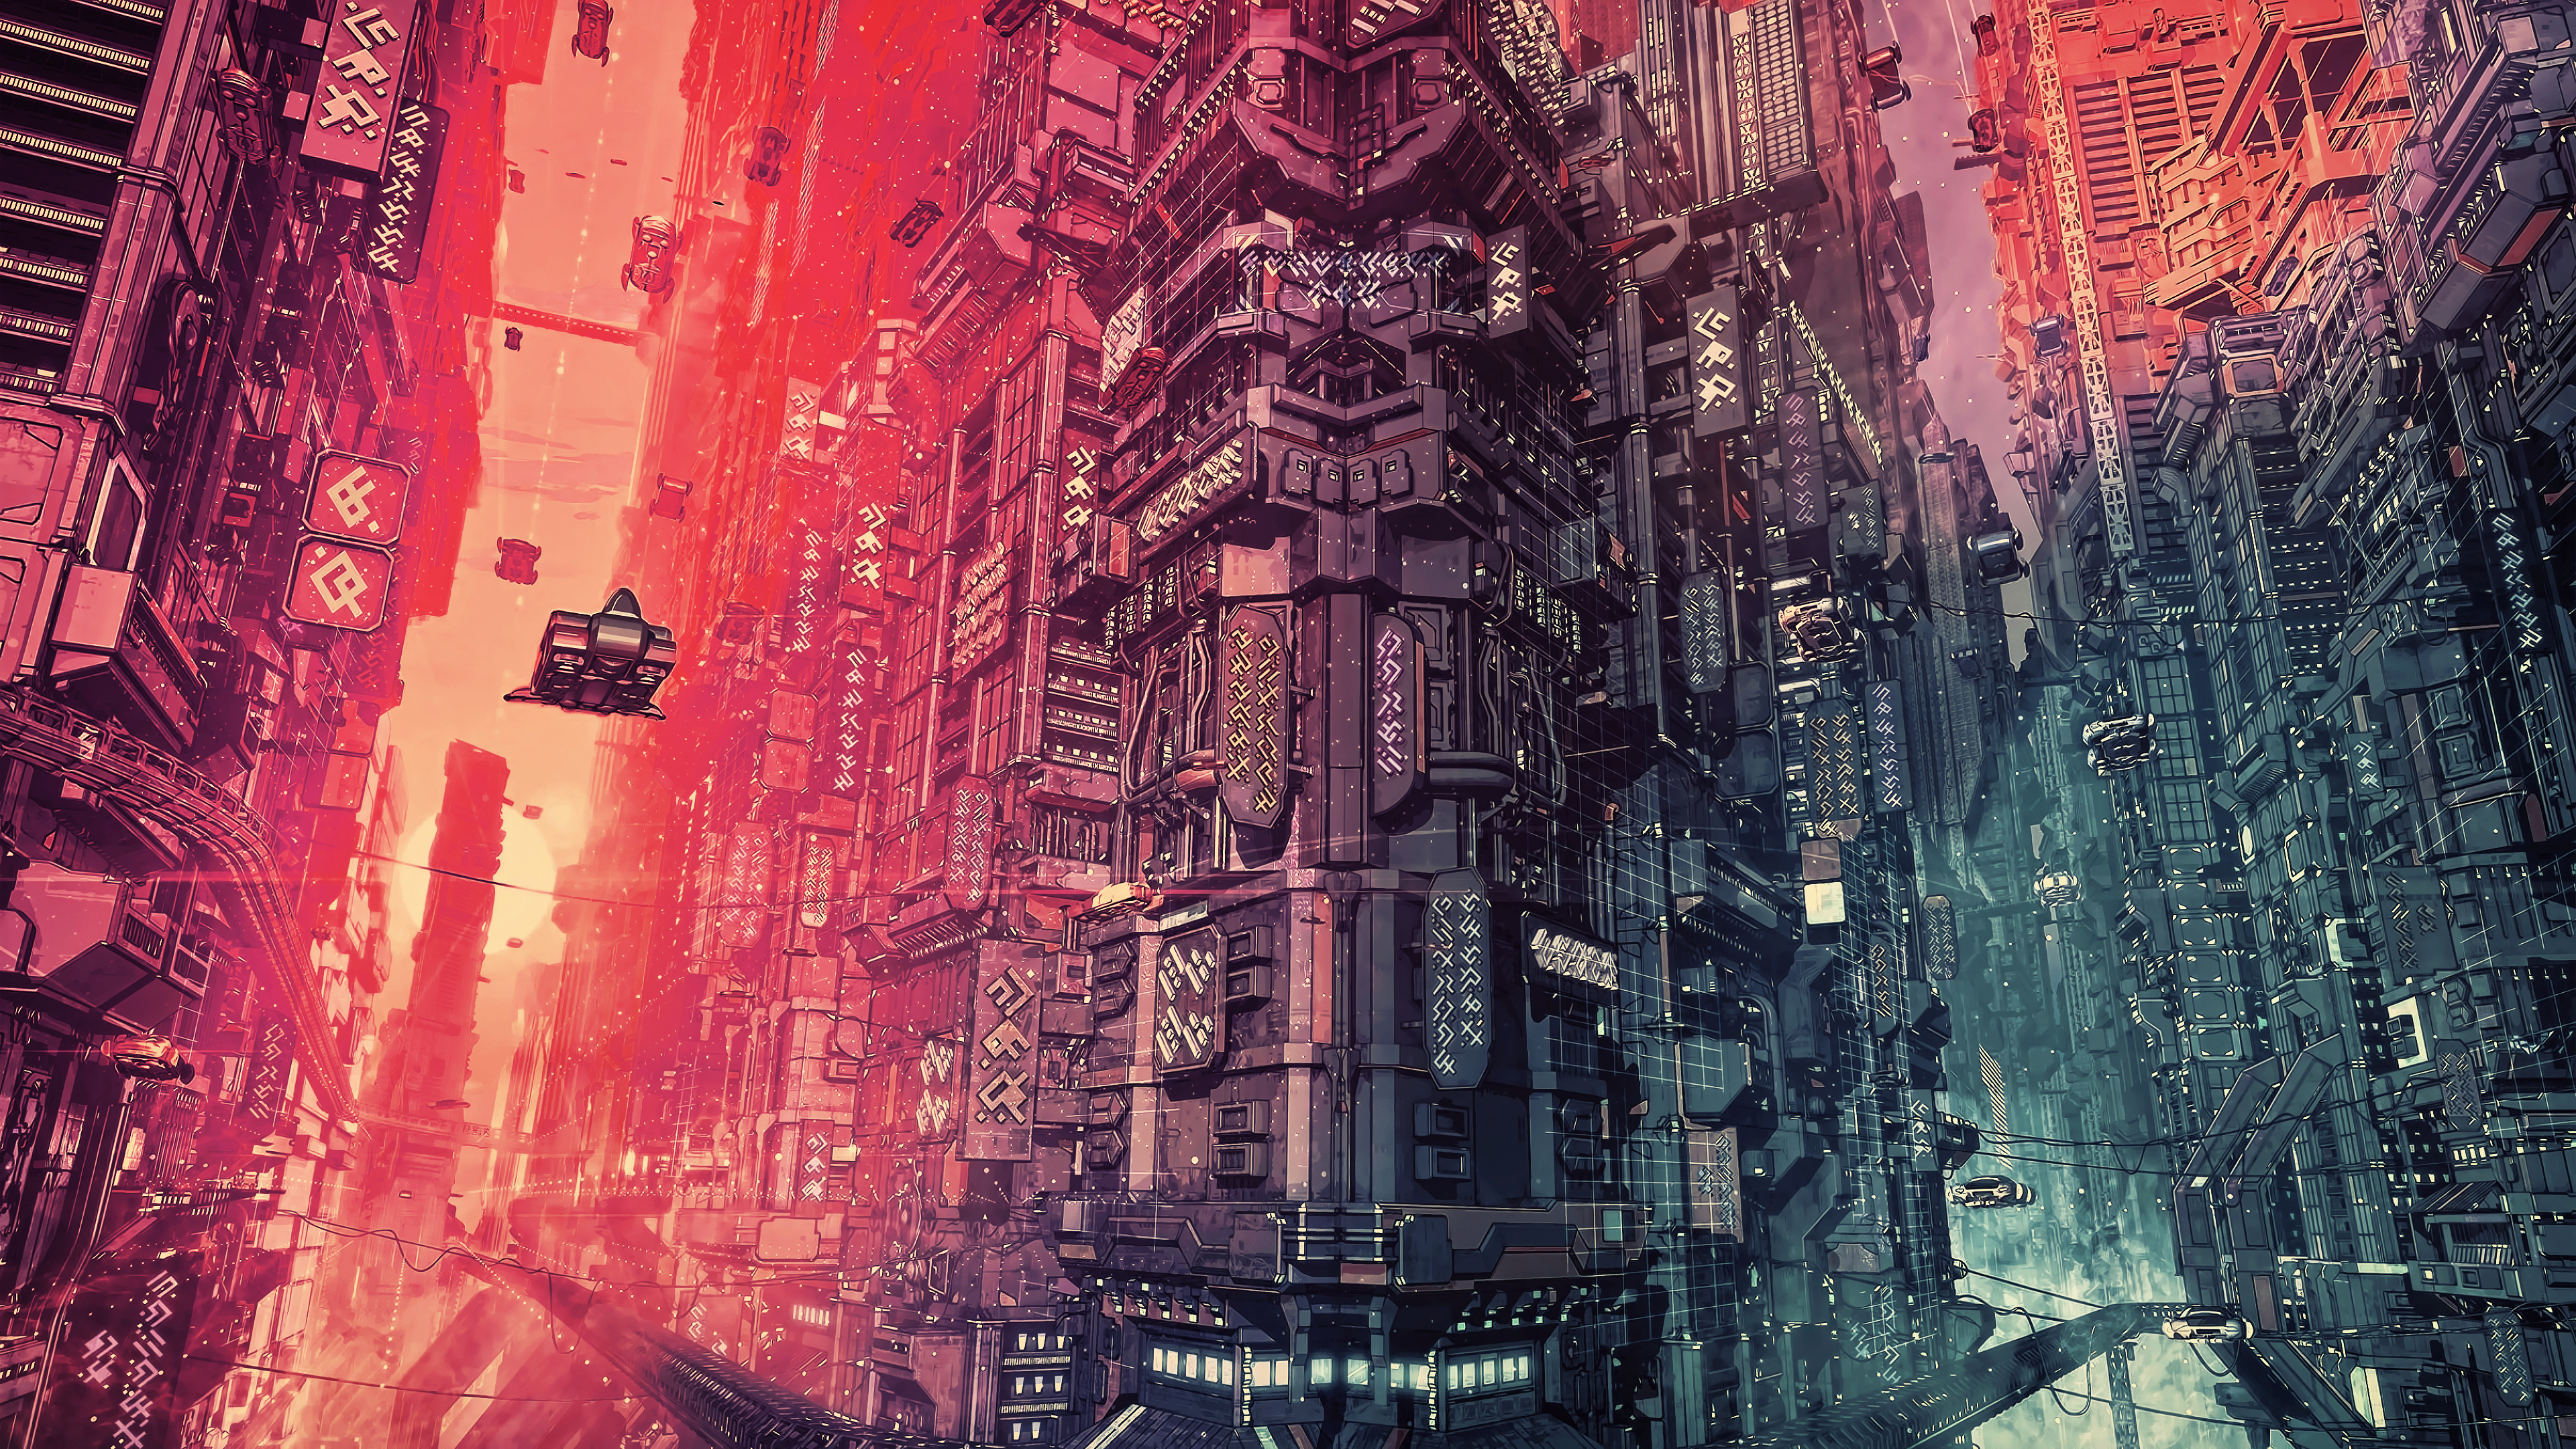 Cyber Futuristic City Fantasy Art 4k Wallpaper,HD Artist Wallpapers,4k ...